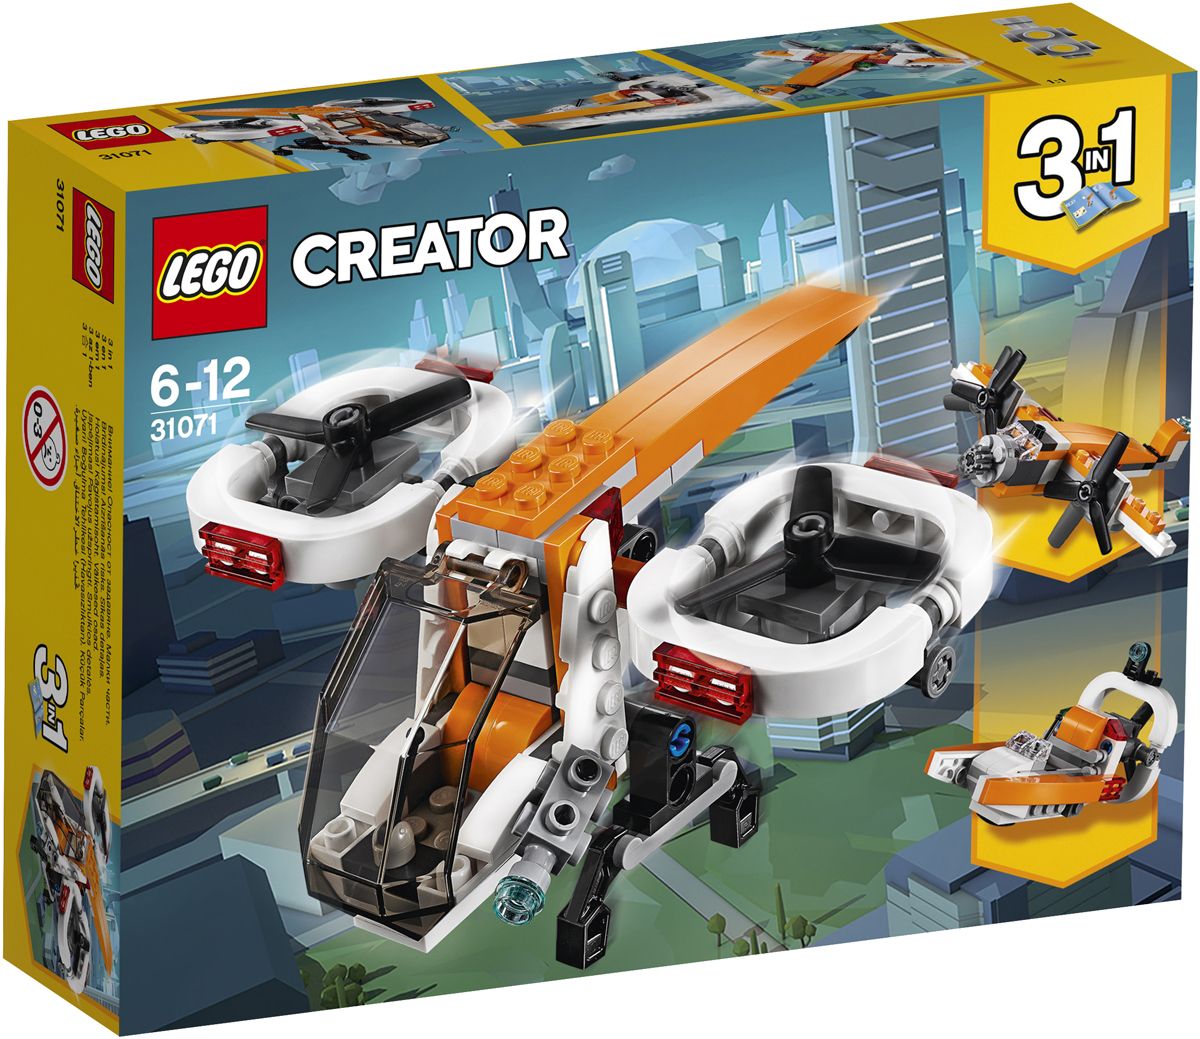 LEGO Creator 31071 - 